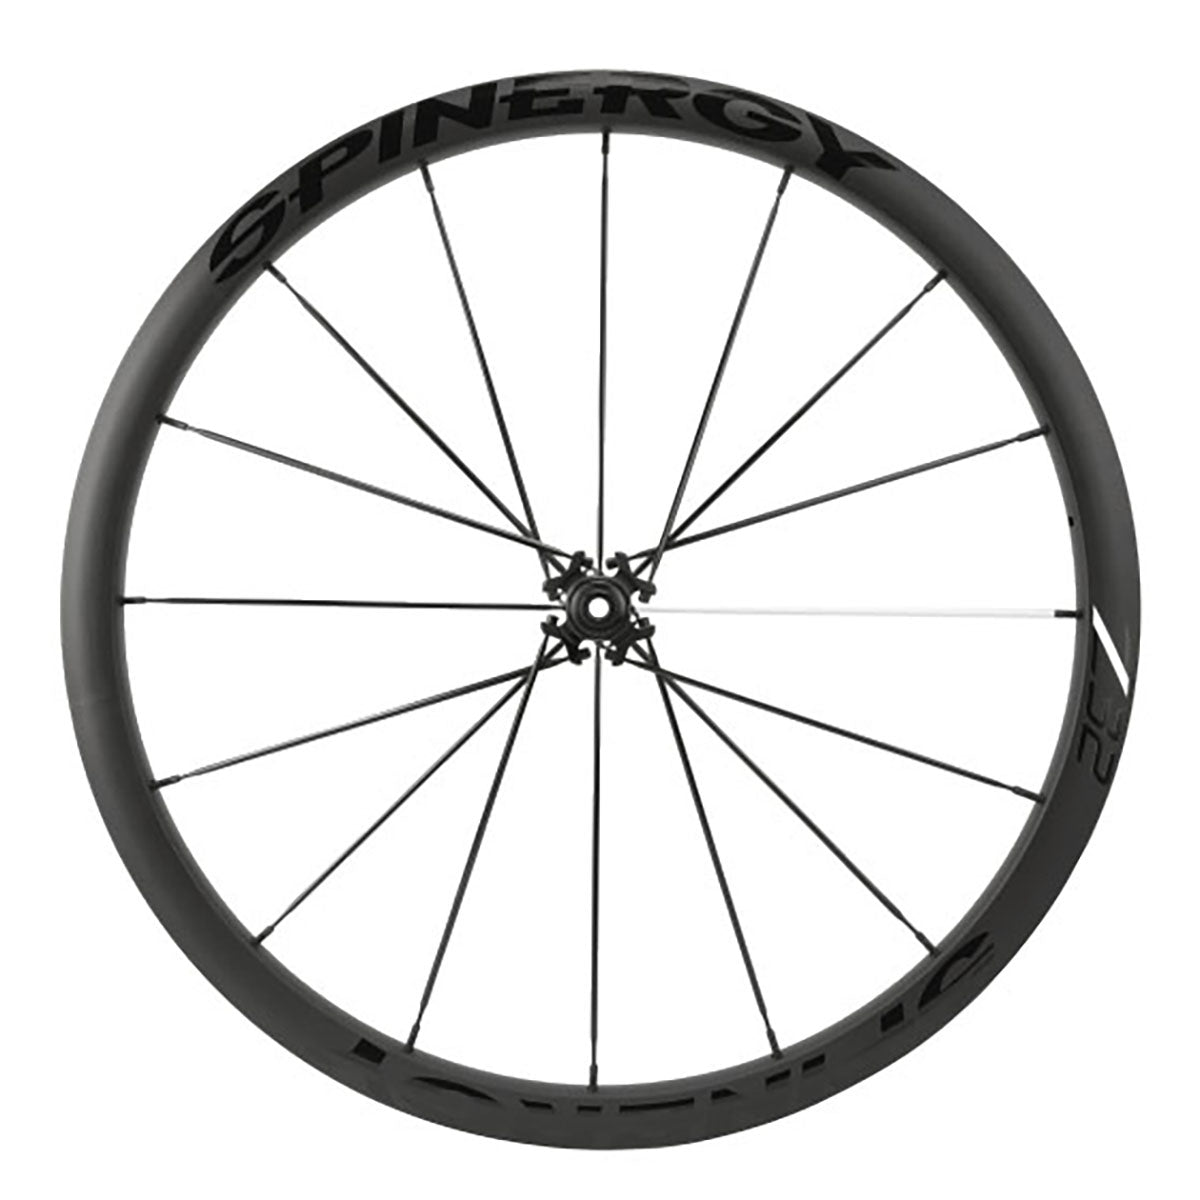 SPINERGY - Z32 Centerlock 700c, Bicycle Wheel Set - Road, Climbing, Sprinting - 2021 Model w/ "44" Hub